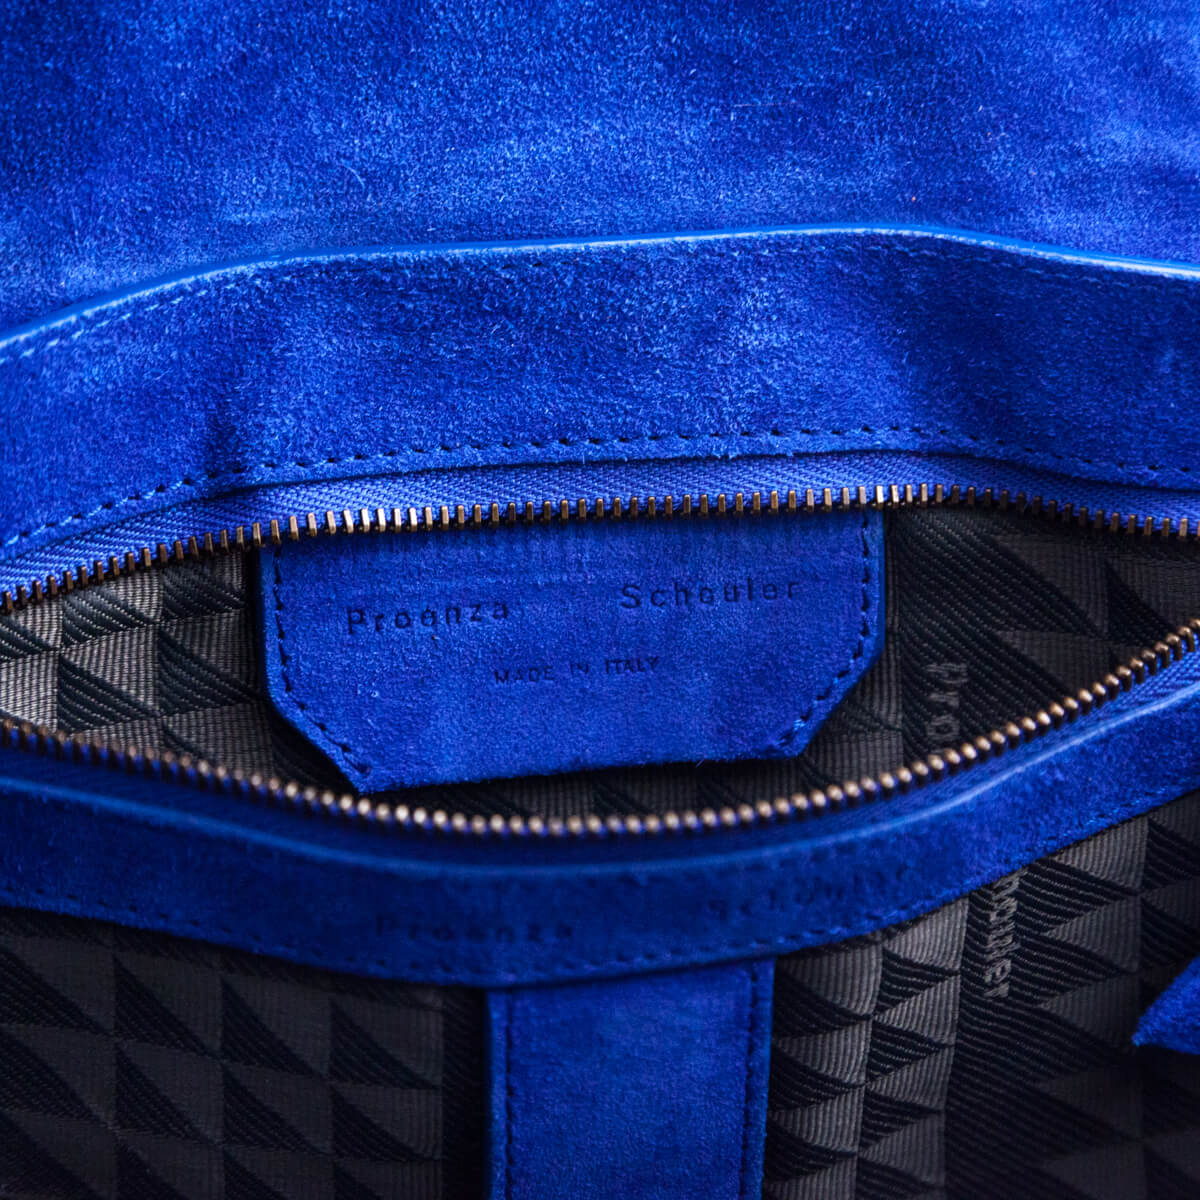 Proenza Schouler Royal Blue Suede Medium PS1 Satchel - Love that Bag etc - Preowned Authentic Designer Handbags & Preloved Fashions